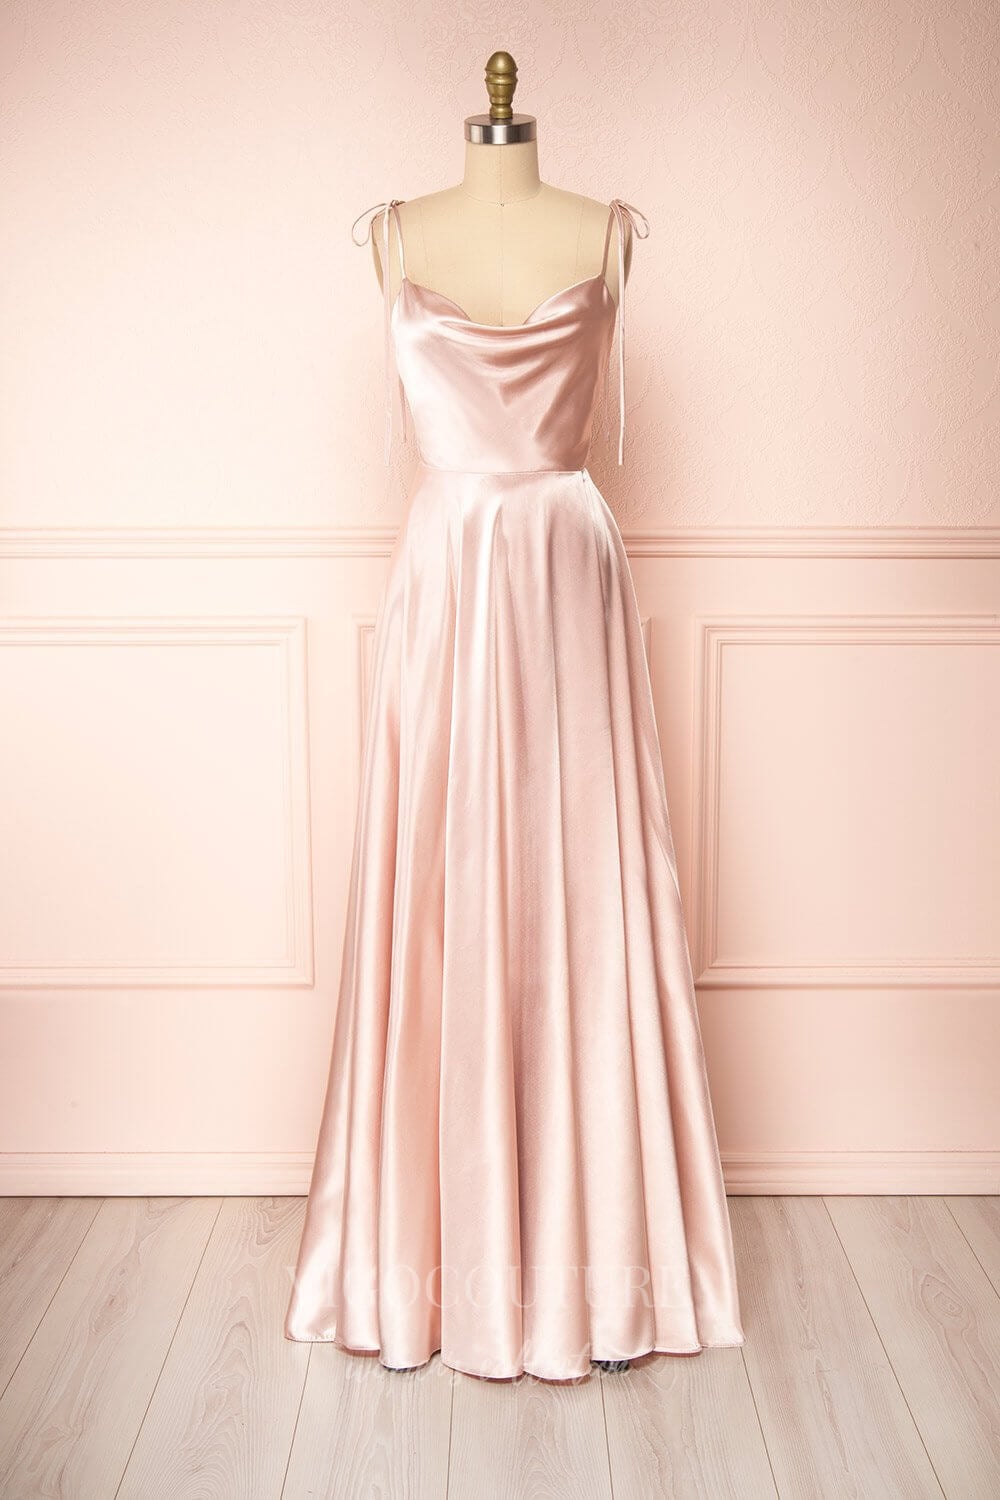 vigocouture-Dusty Pink Spaghetti Strap Prom Dress 20578-Prom Dresses-vigocouture-Blush-US2-